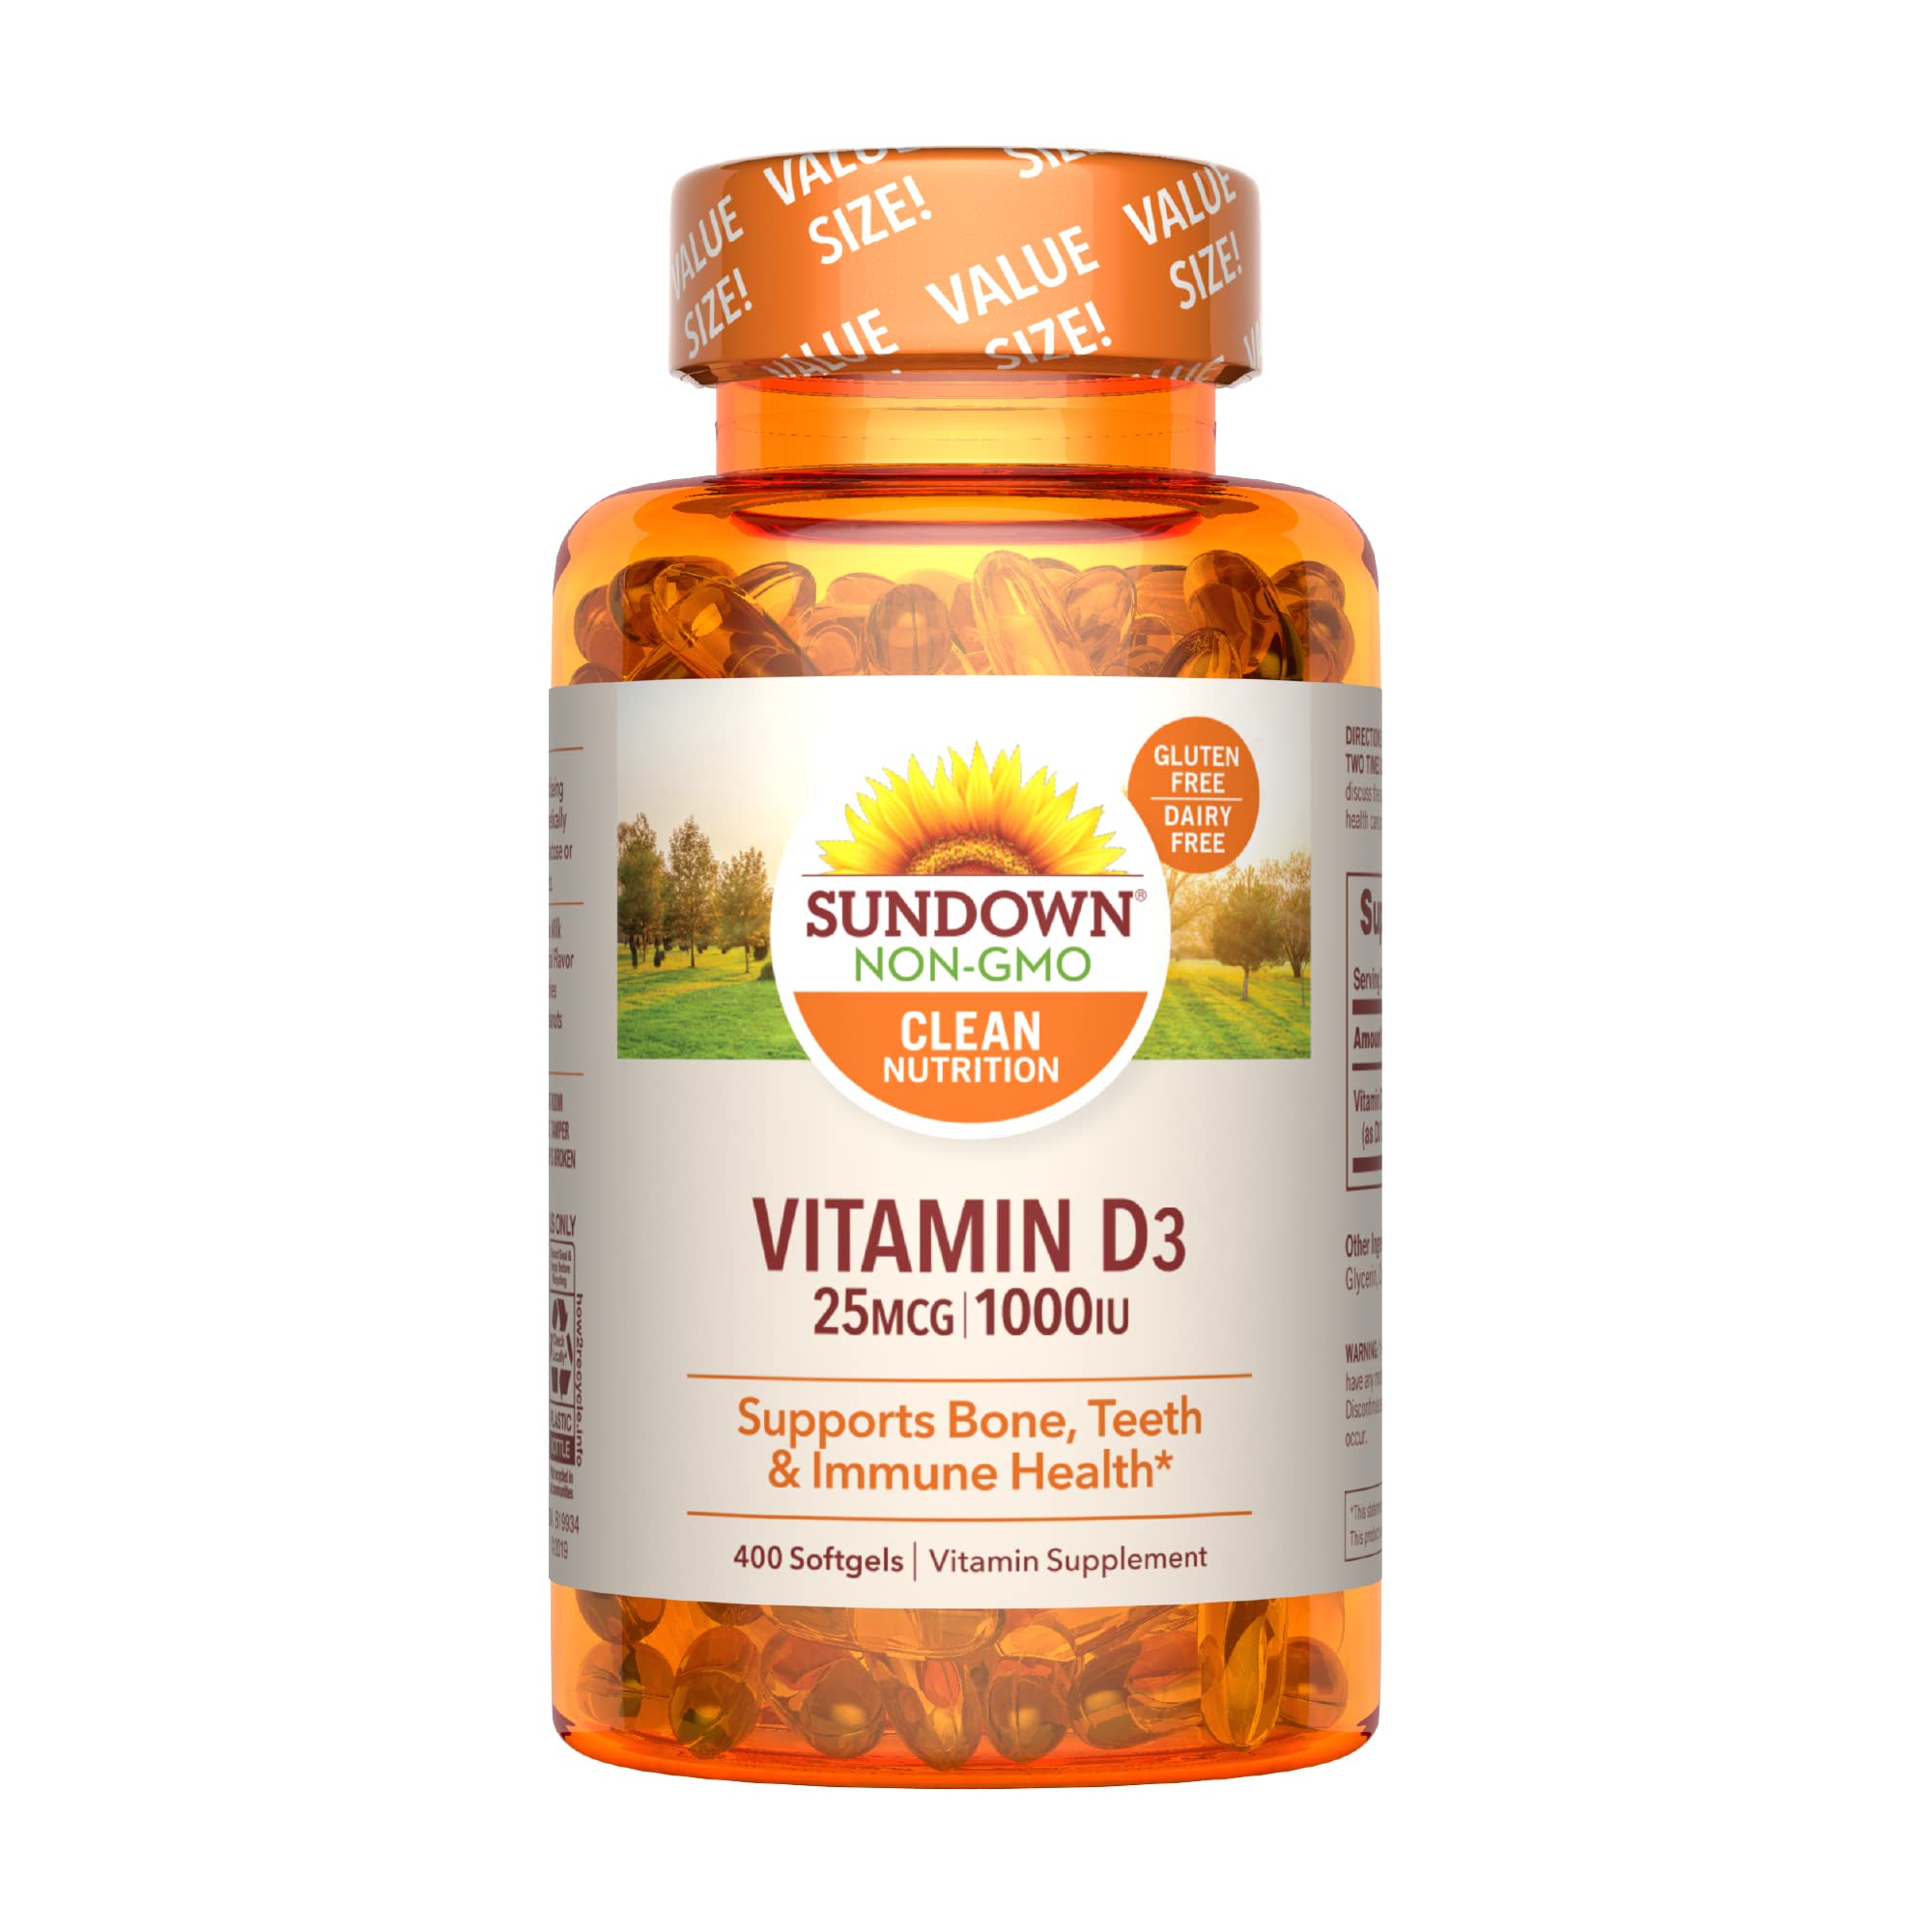 400-Count Sundown Vitamin D3 1000IU (25mcg) Softgels $4.95 w/ S&S + Free Shipping w/ Prime or Orders $35+